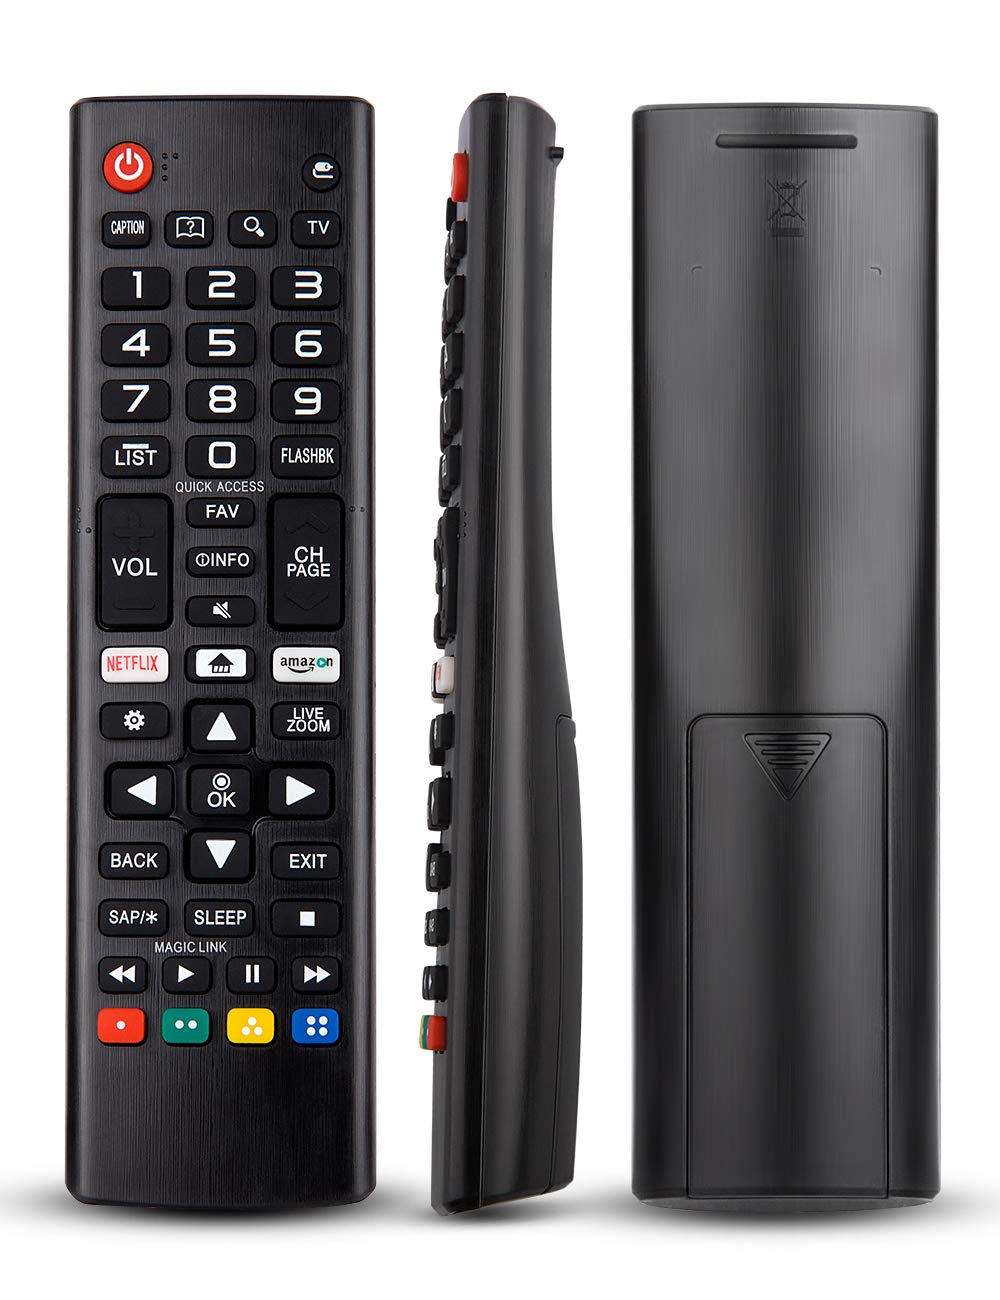  [AUSTRALIA] - Universal Remote Control for All LG Smart TV LCD LED OLED UHD HDTV Plasma Magic 3D 4K Webos TVs AKB75095307 AKB75375604 AKB75675304 AKB74915305 AKB76037601 AKB75675313 AKB75855501 AK5307